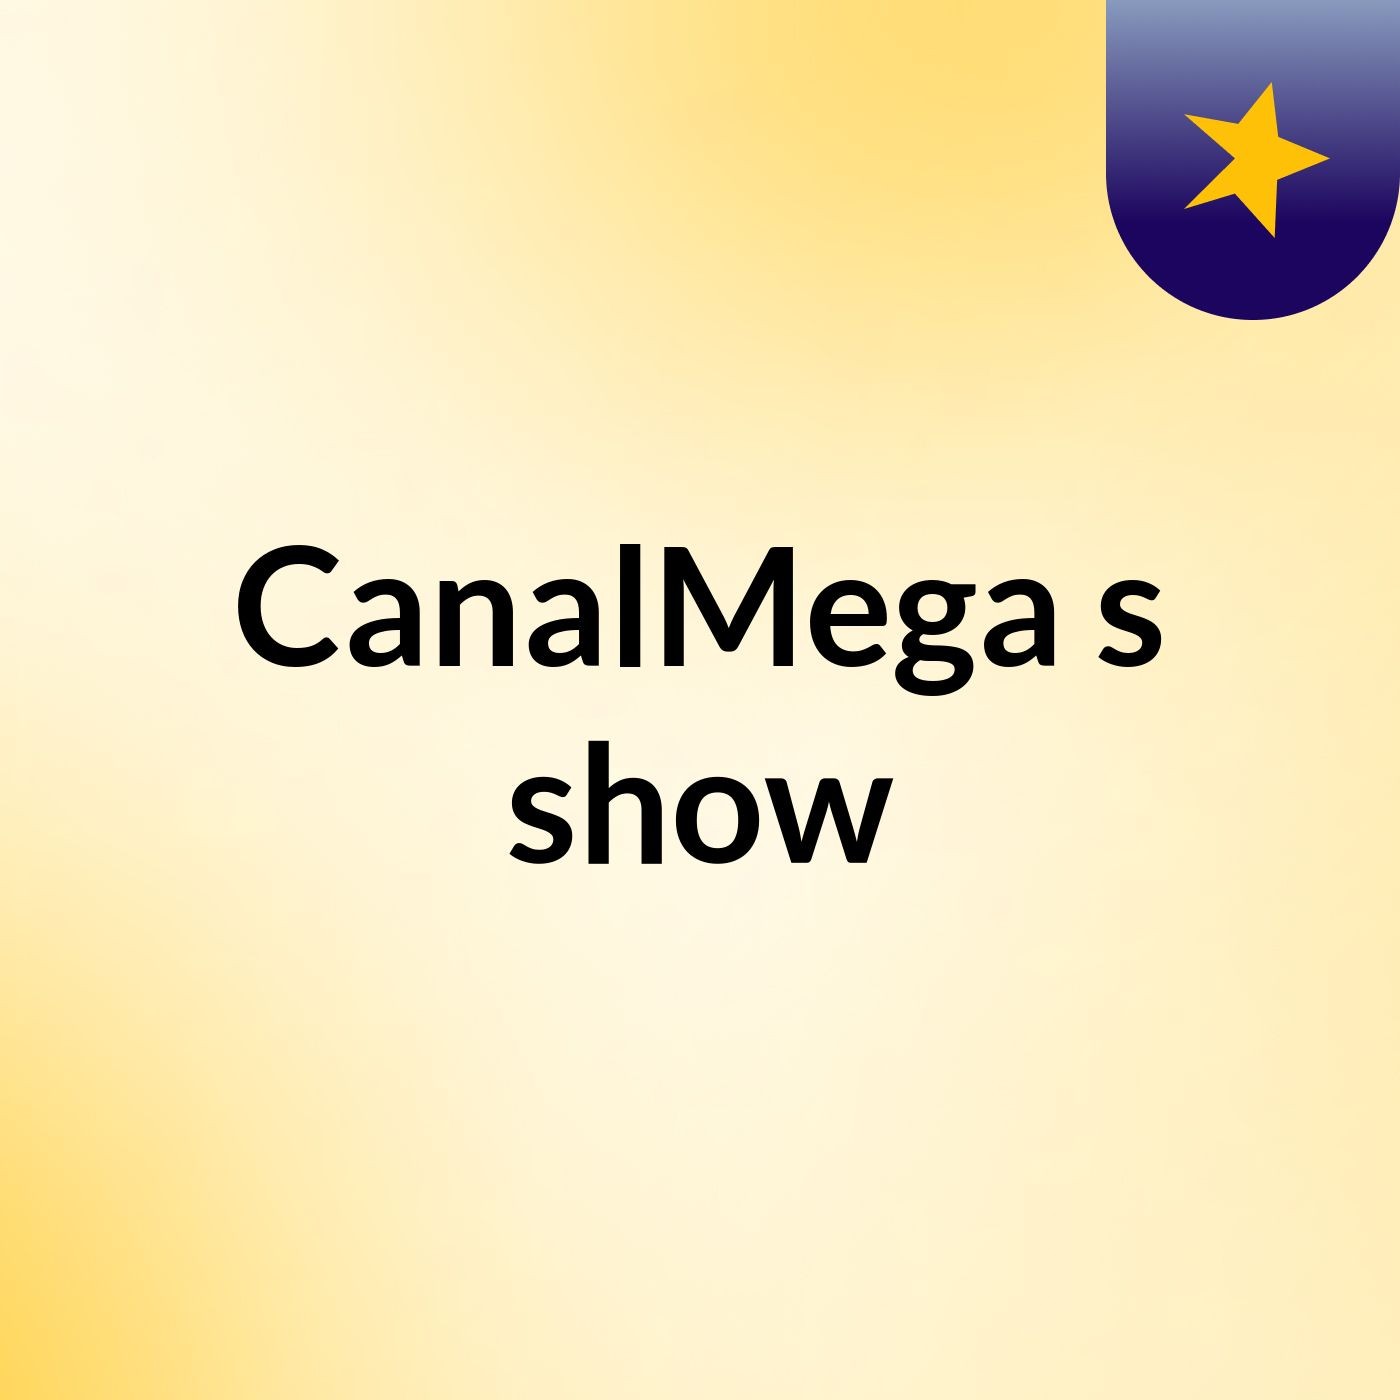 CanalMega's show